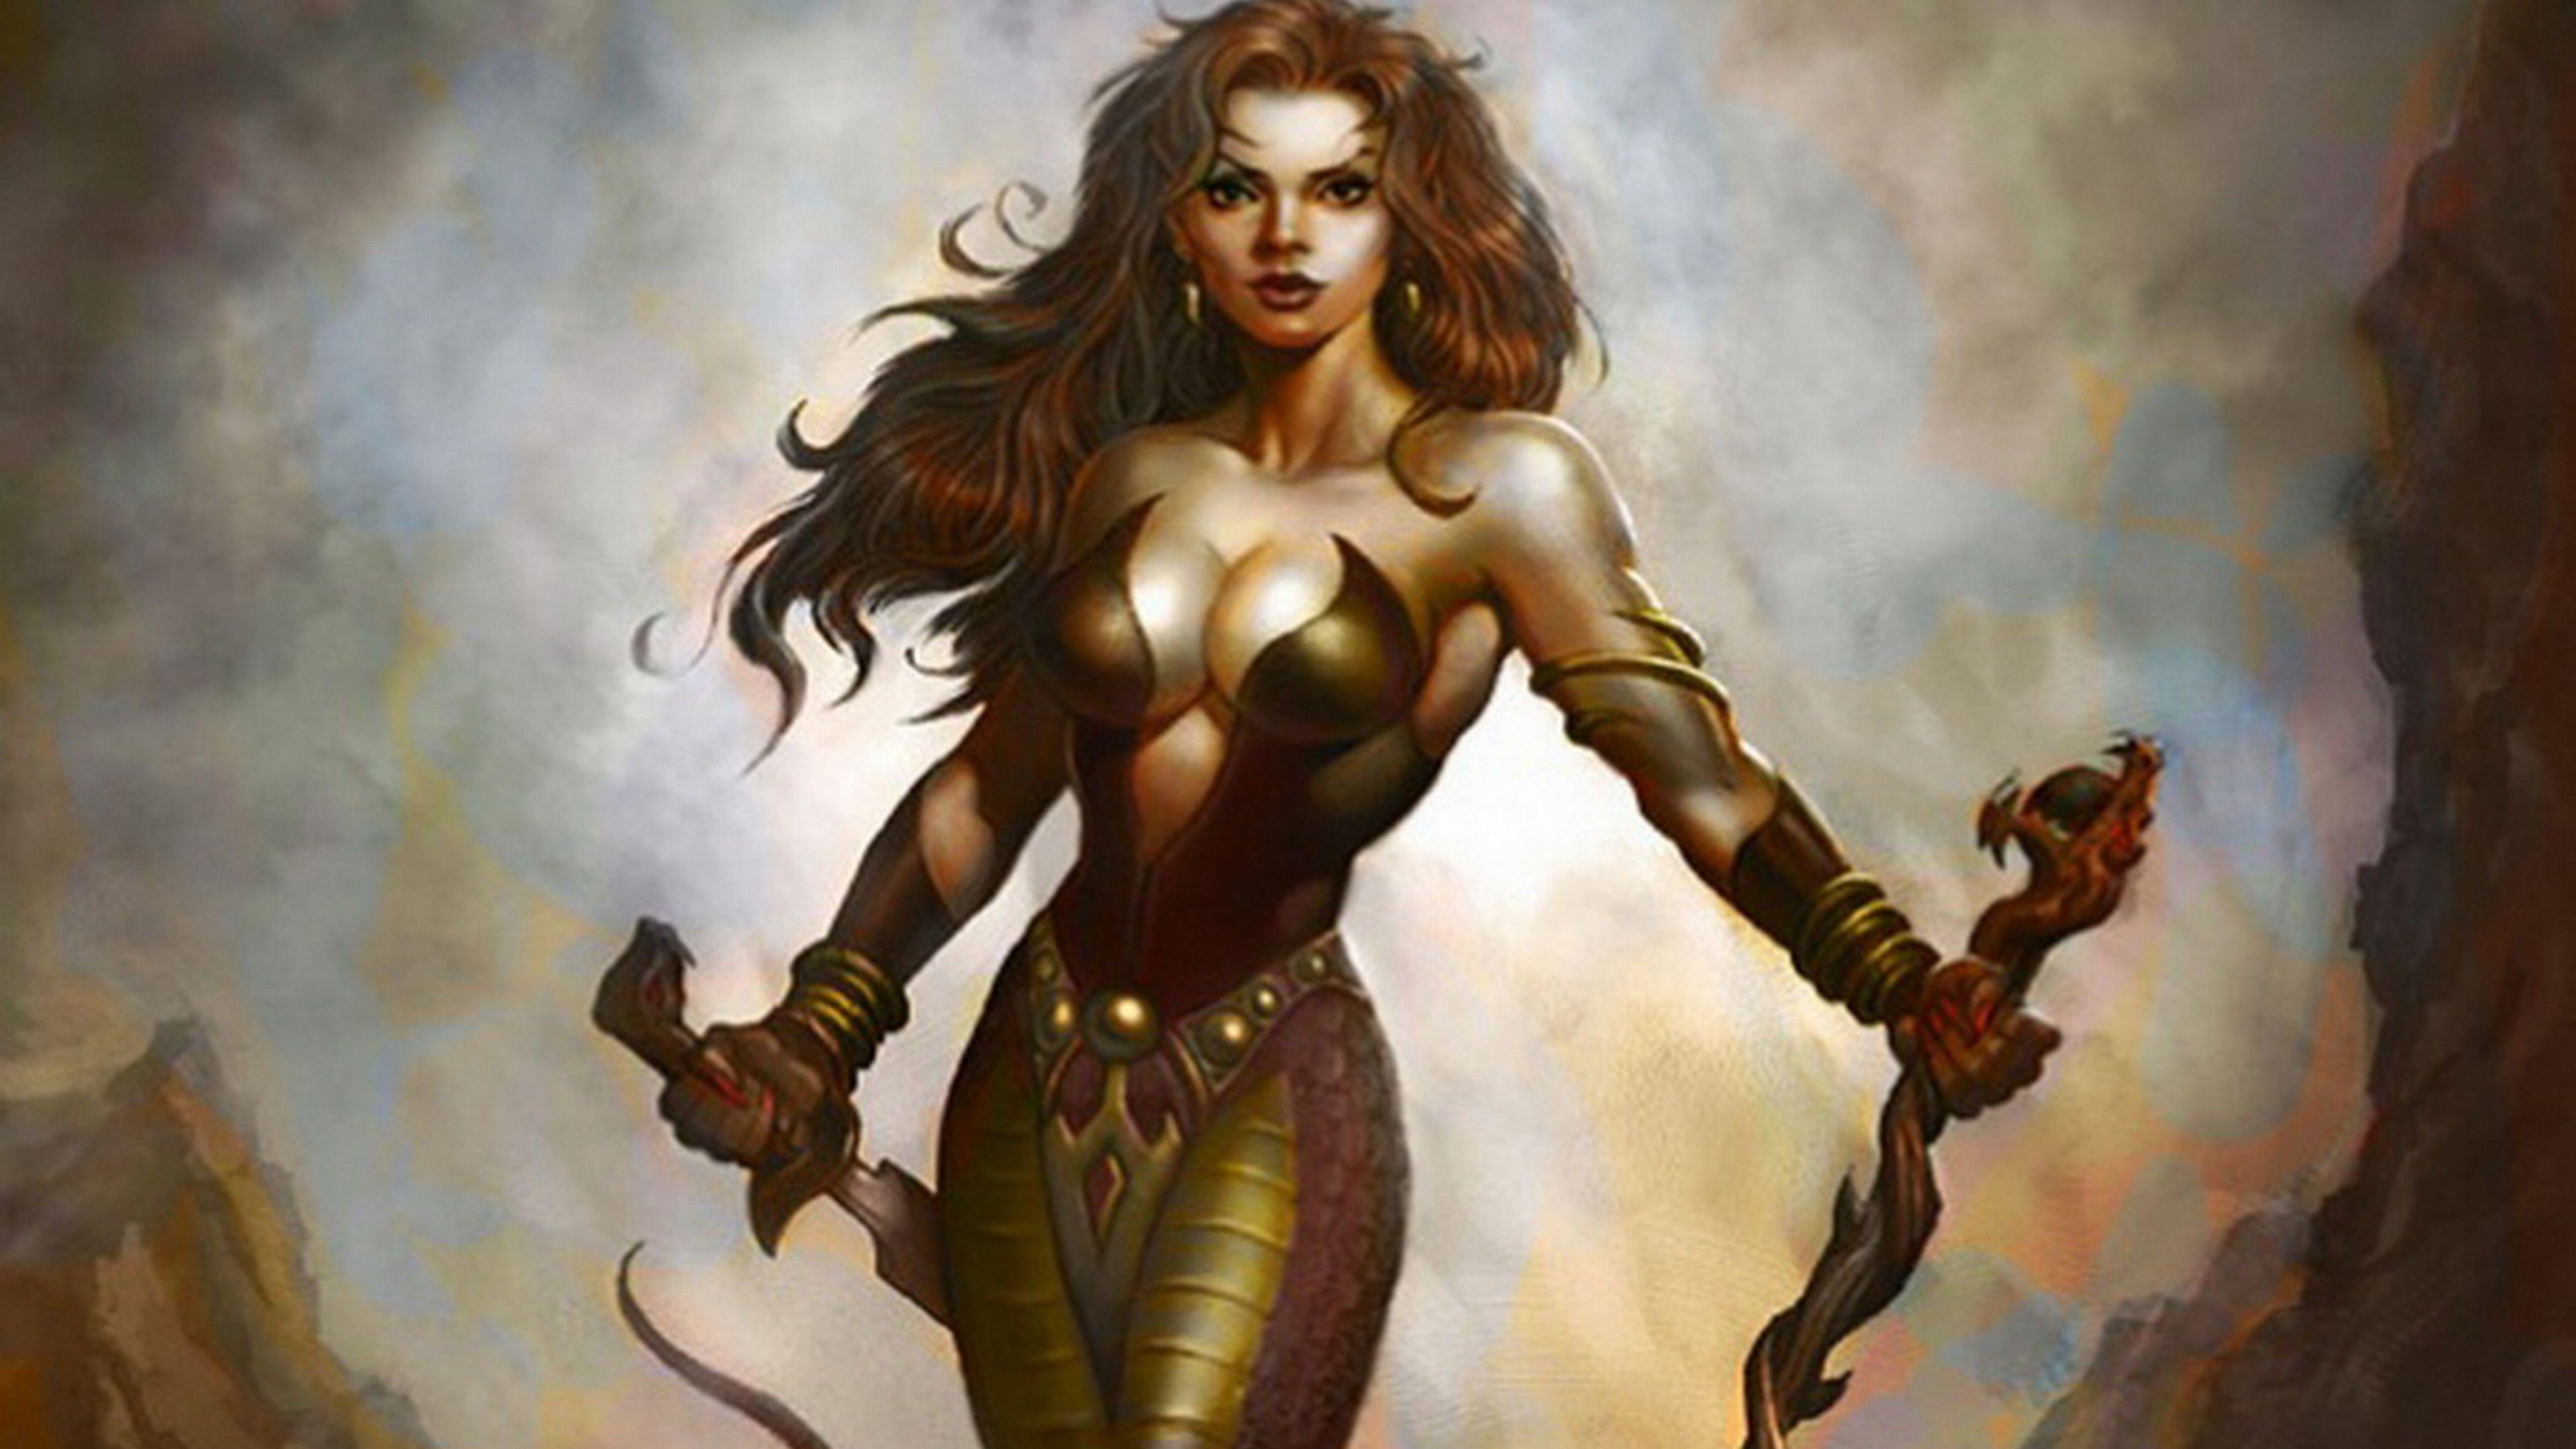 Fantasy Warrior Woman Wallpapers